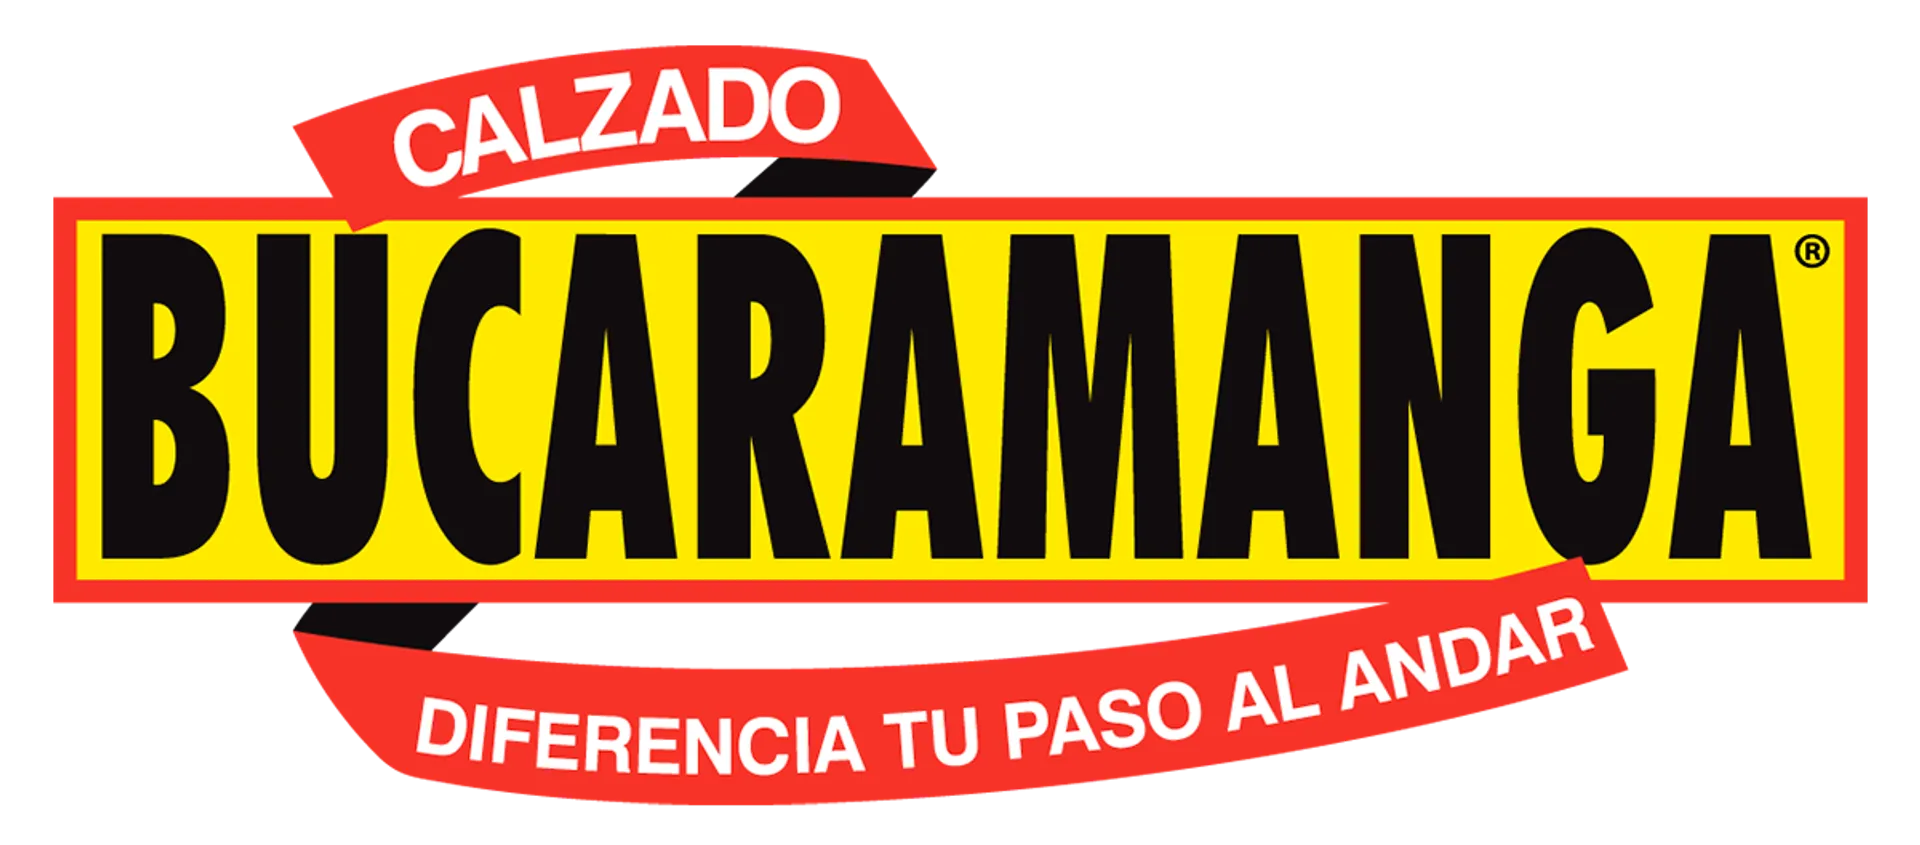 CALZADO BUCARAMANGA logo de catálogo